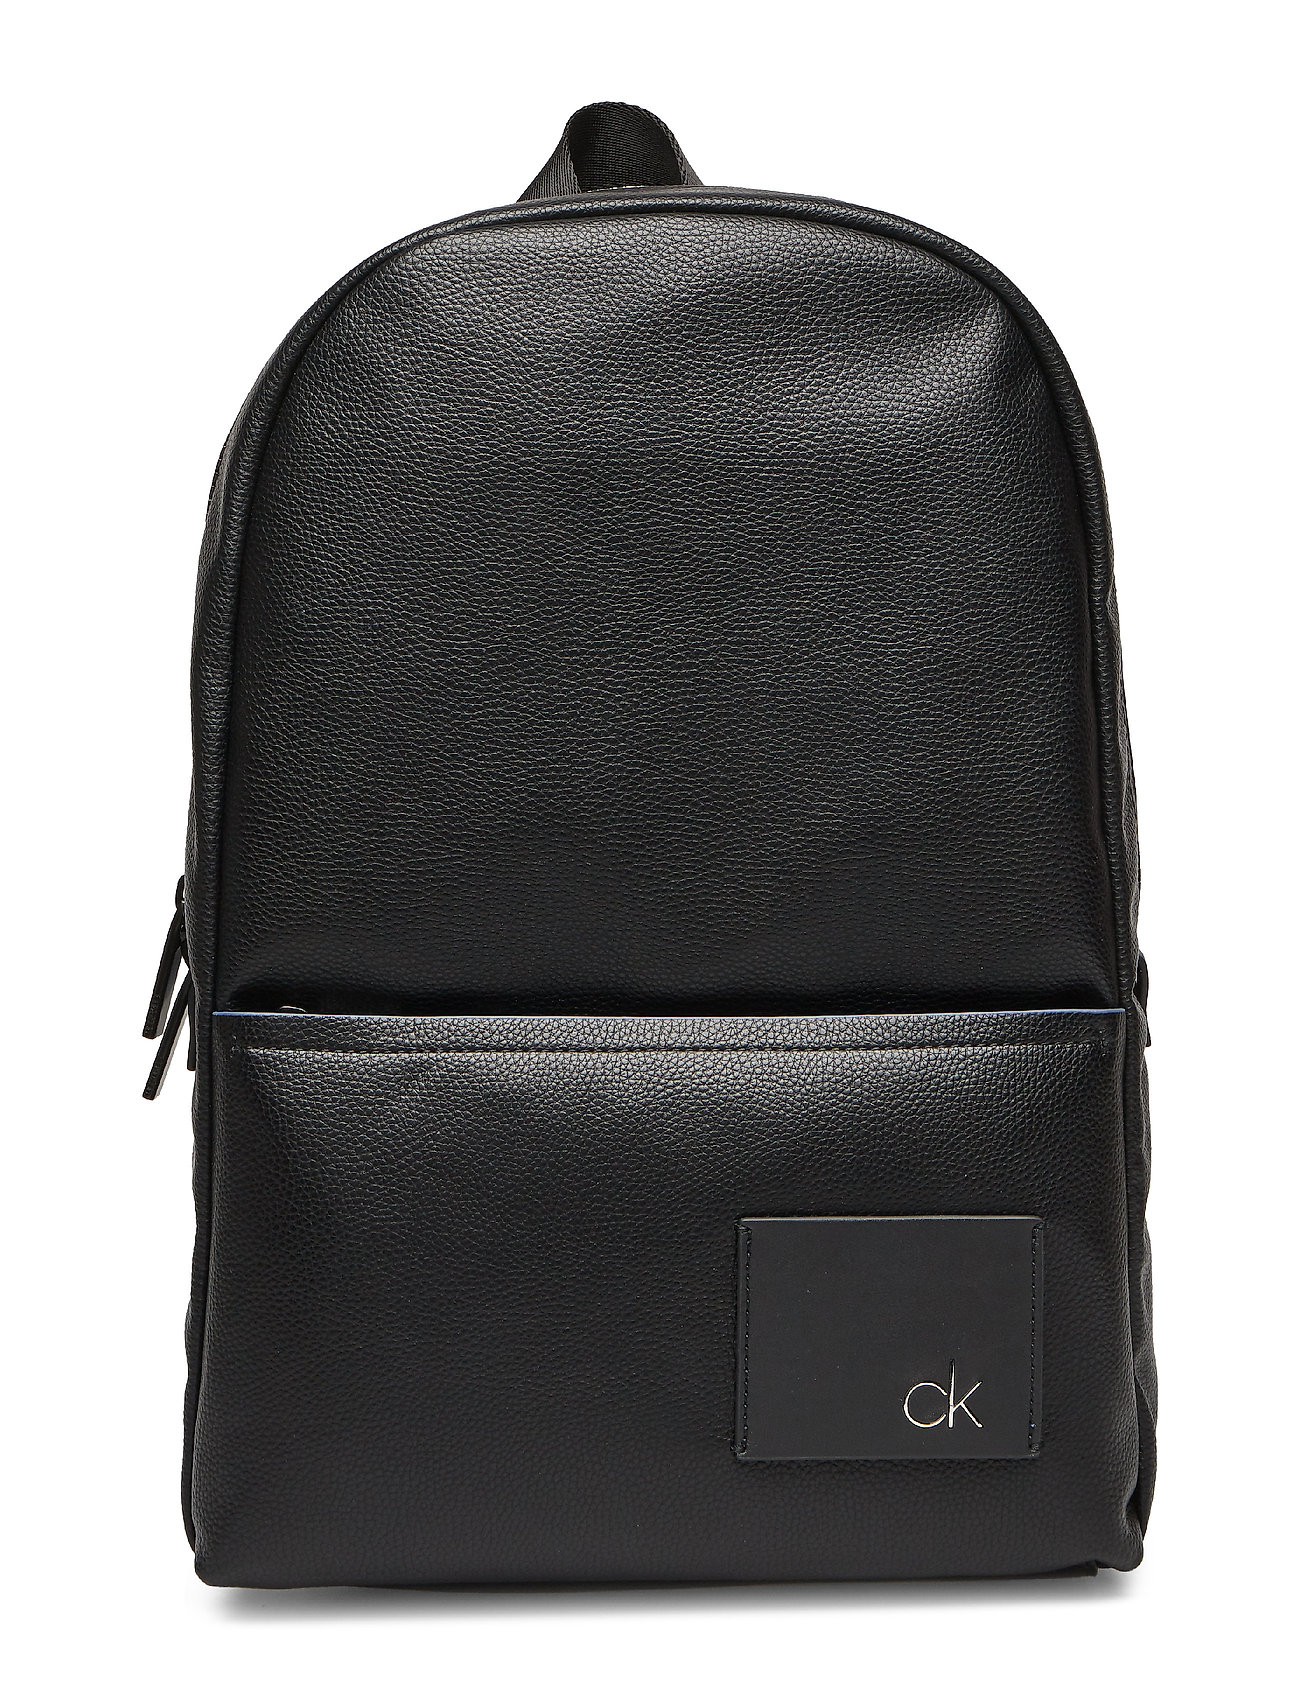 ck backpacks